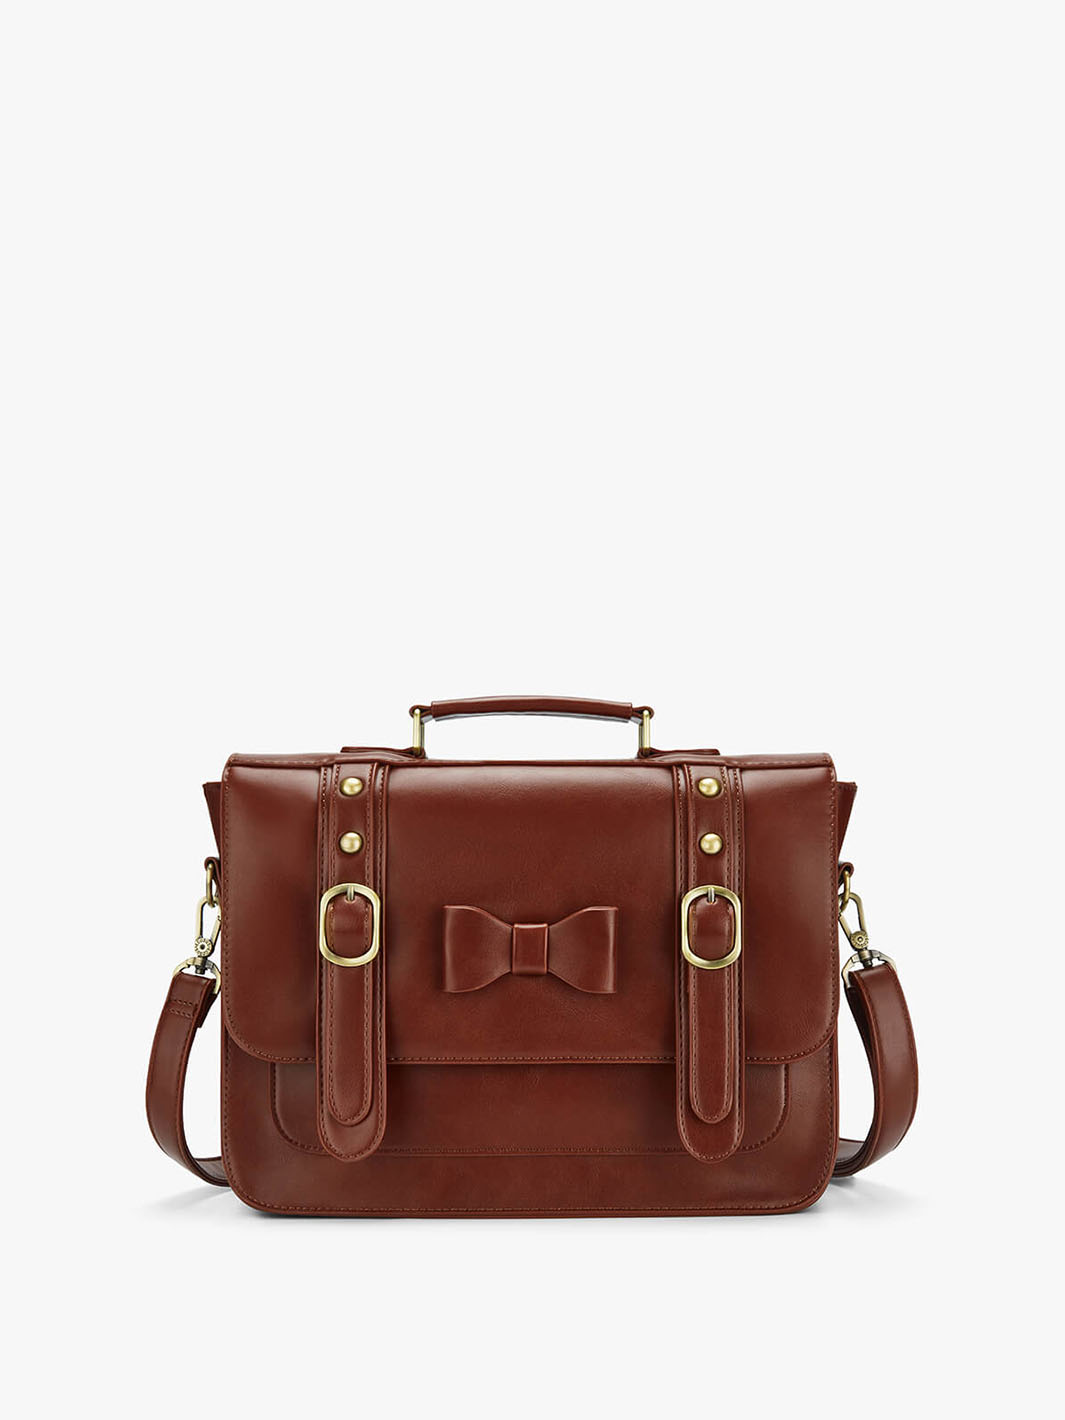 Large Capacity Handbags Women's Pu Leather Messenger Bag 